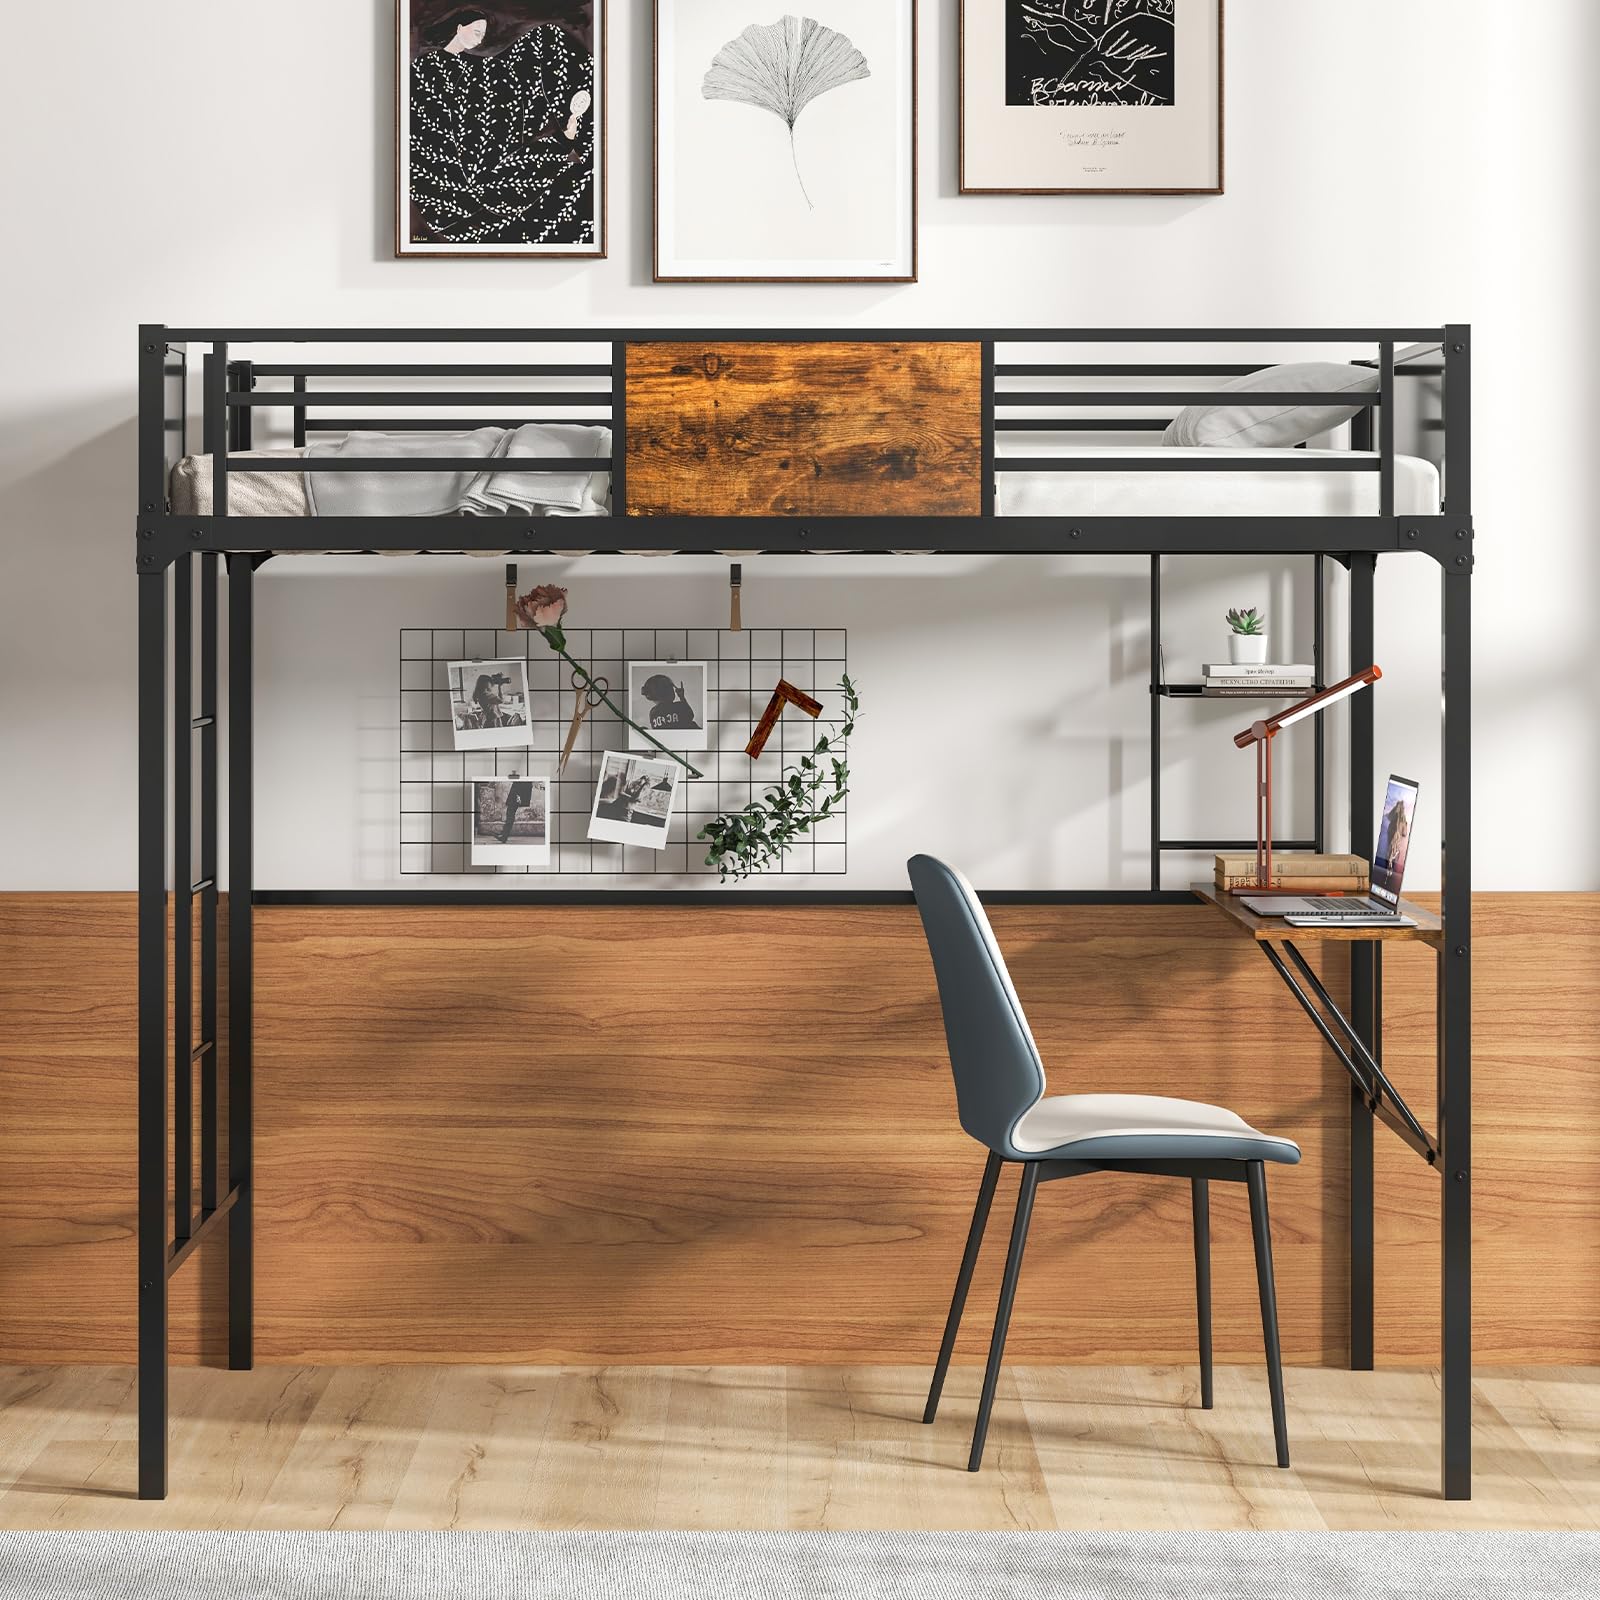 Giantex Loft Bed Twin Size with Desk and Storage Shelf